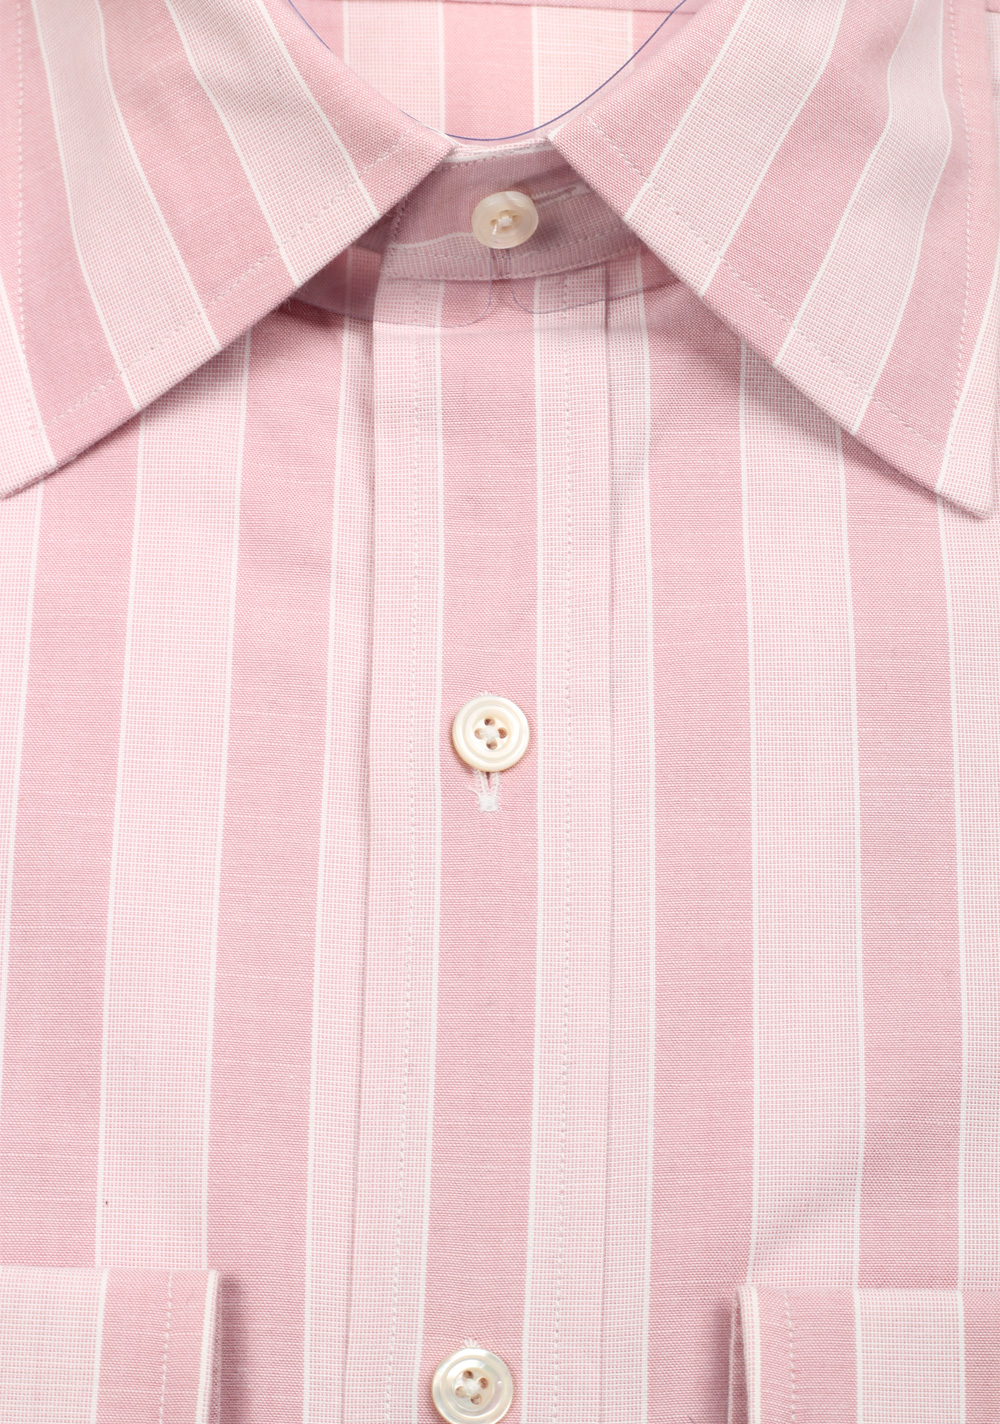 TOM FORD Striped Pink High Collar Dress Shirt Size 40 / 15,75 U.S. | Costume Limité